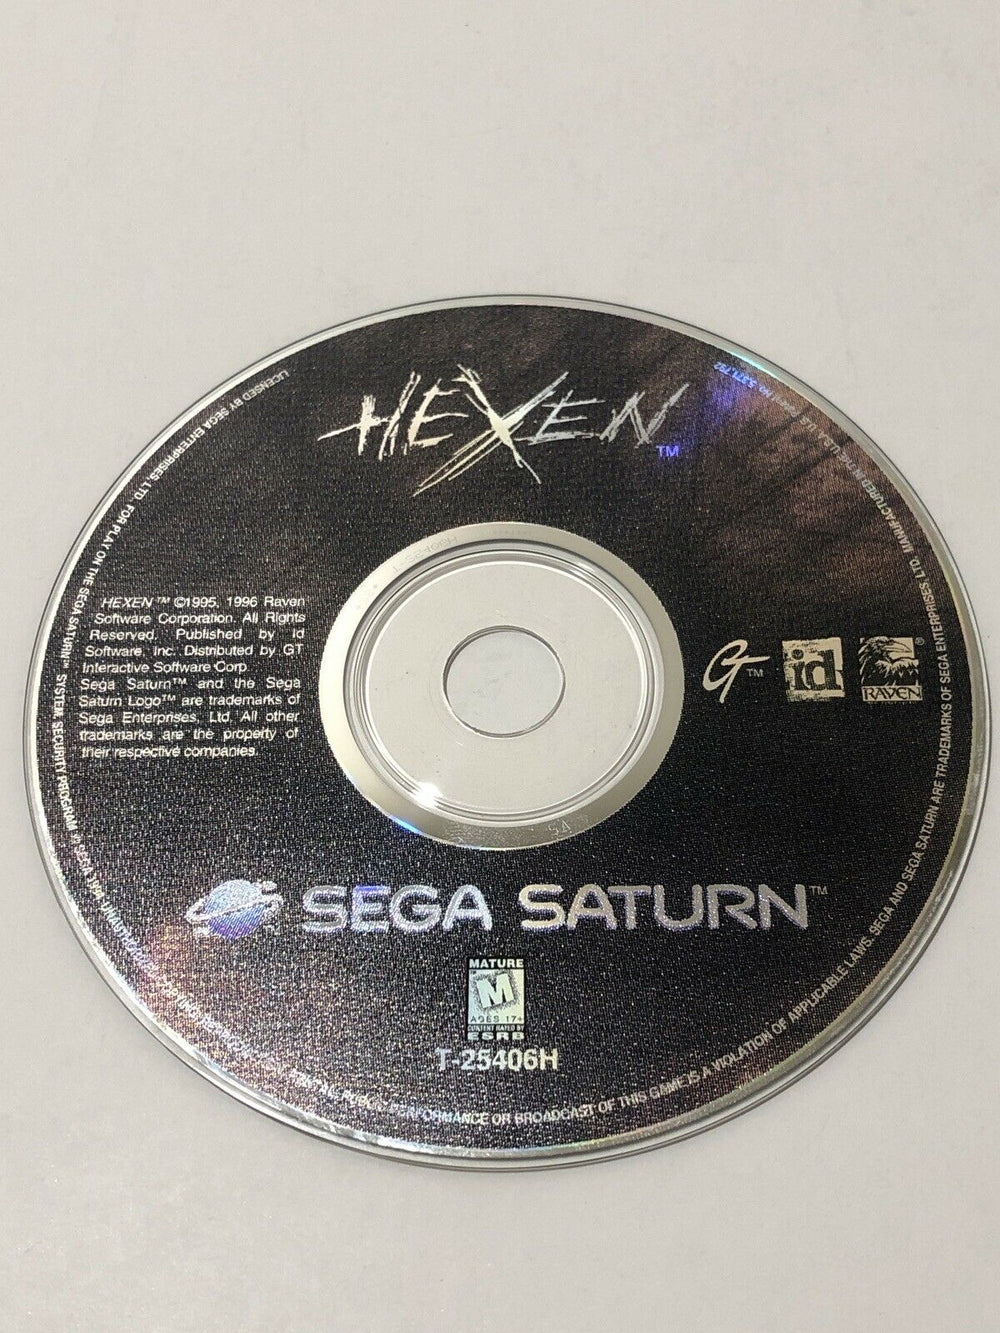 Saturn - Hexen